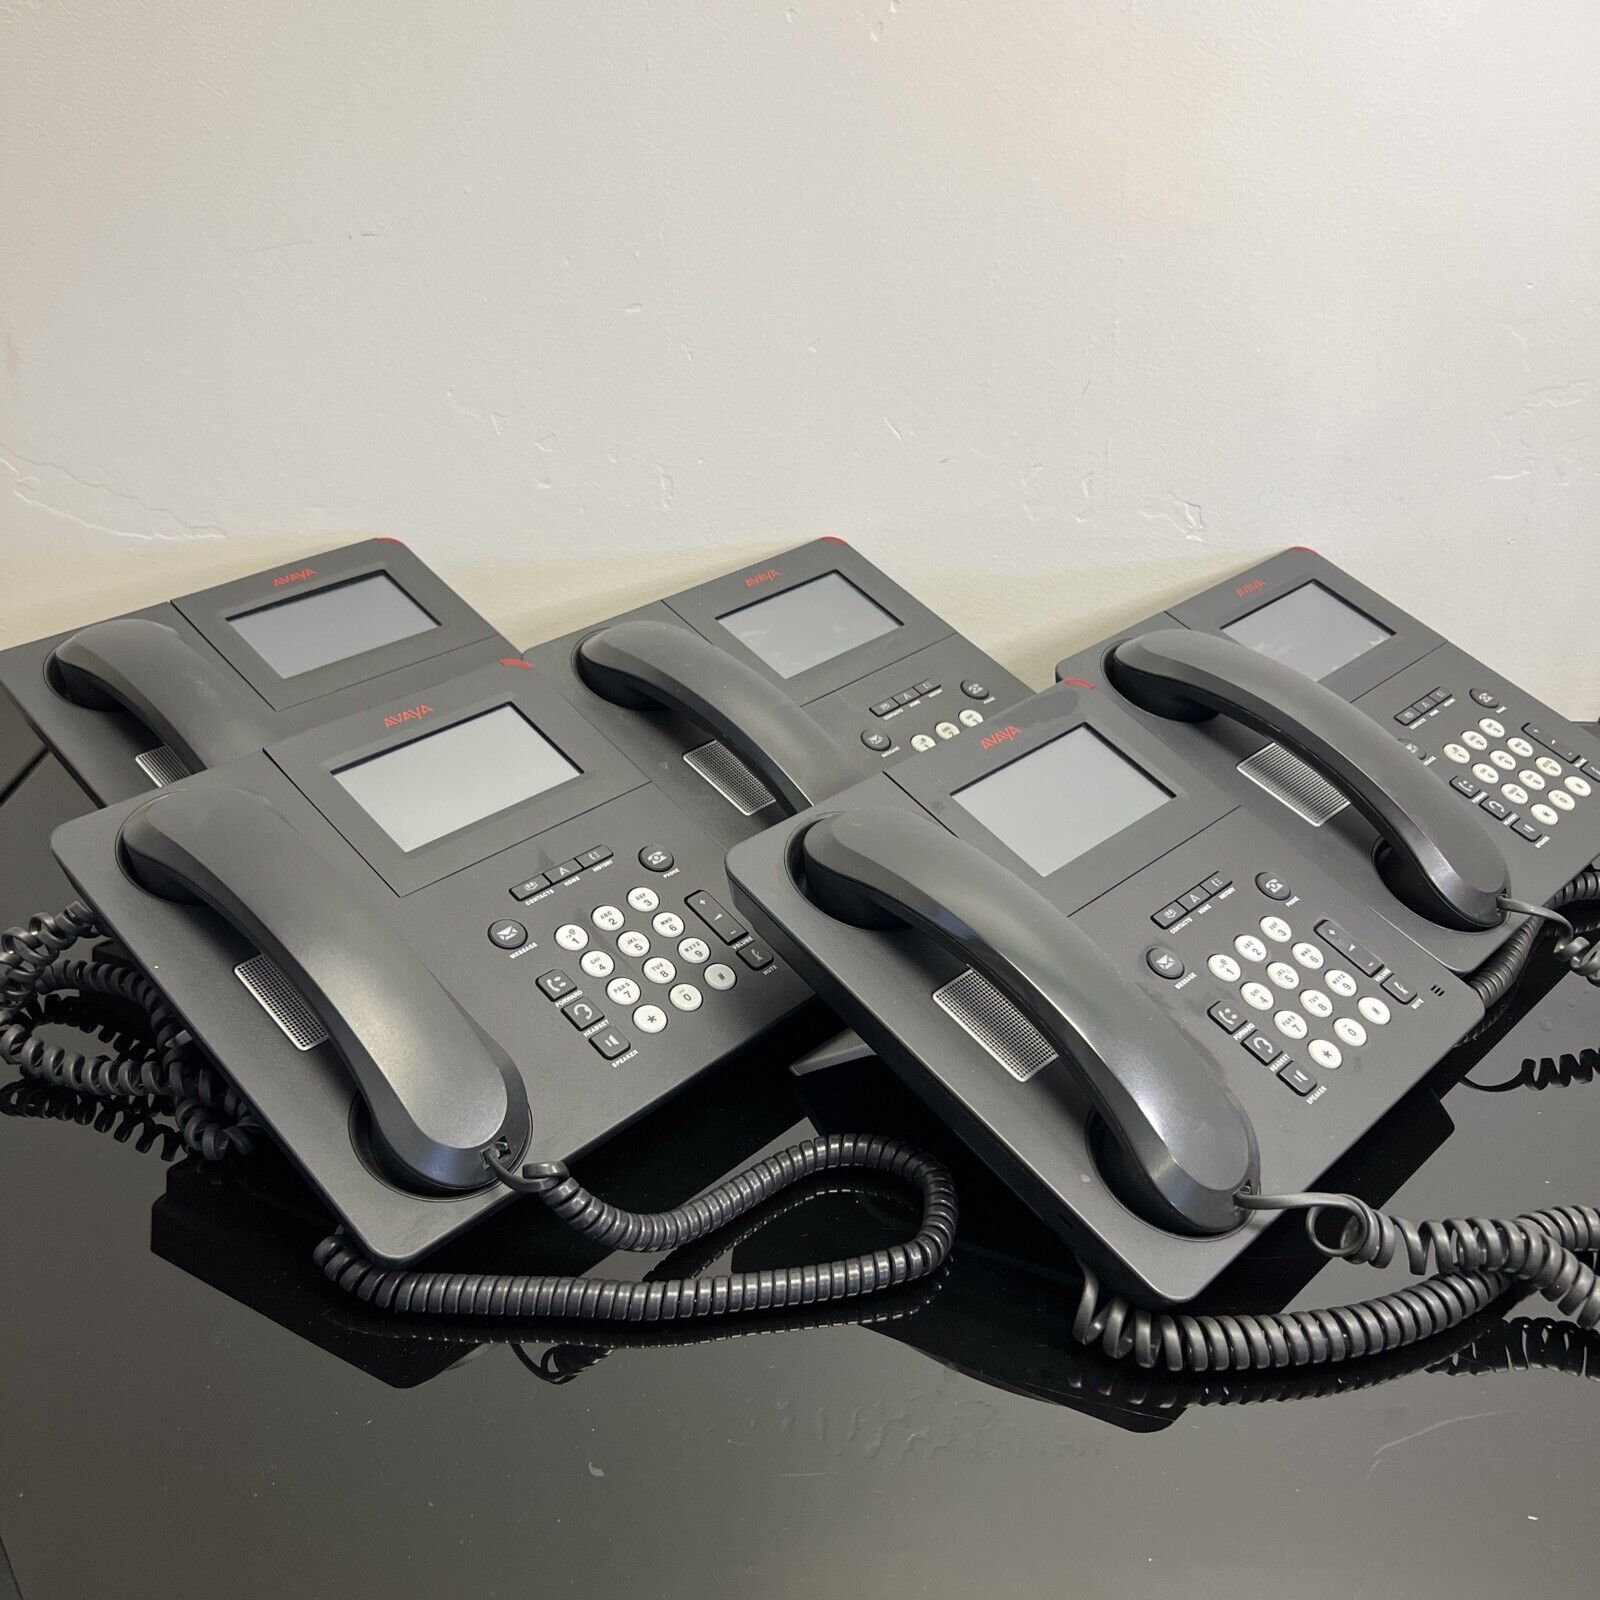 Avaya 9621G IP VOIP Business Desktop Phones With Stand, & Handset - Lot of 5